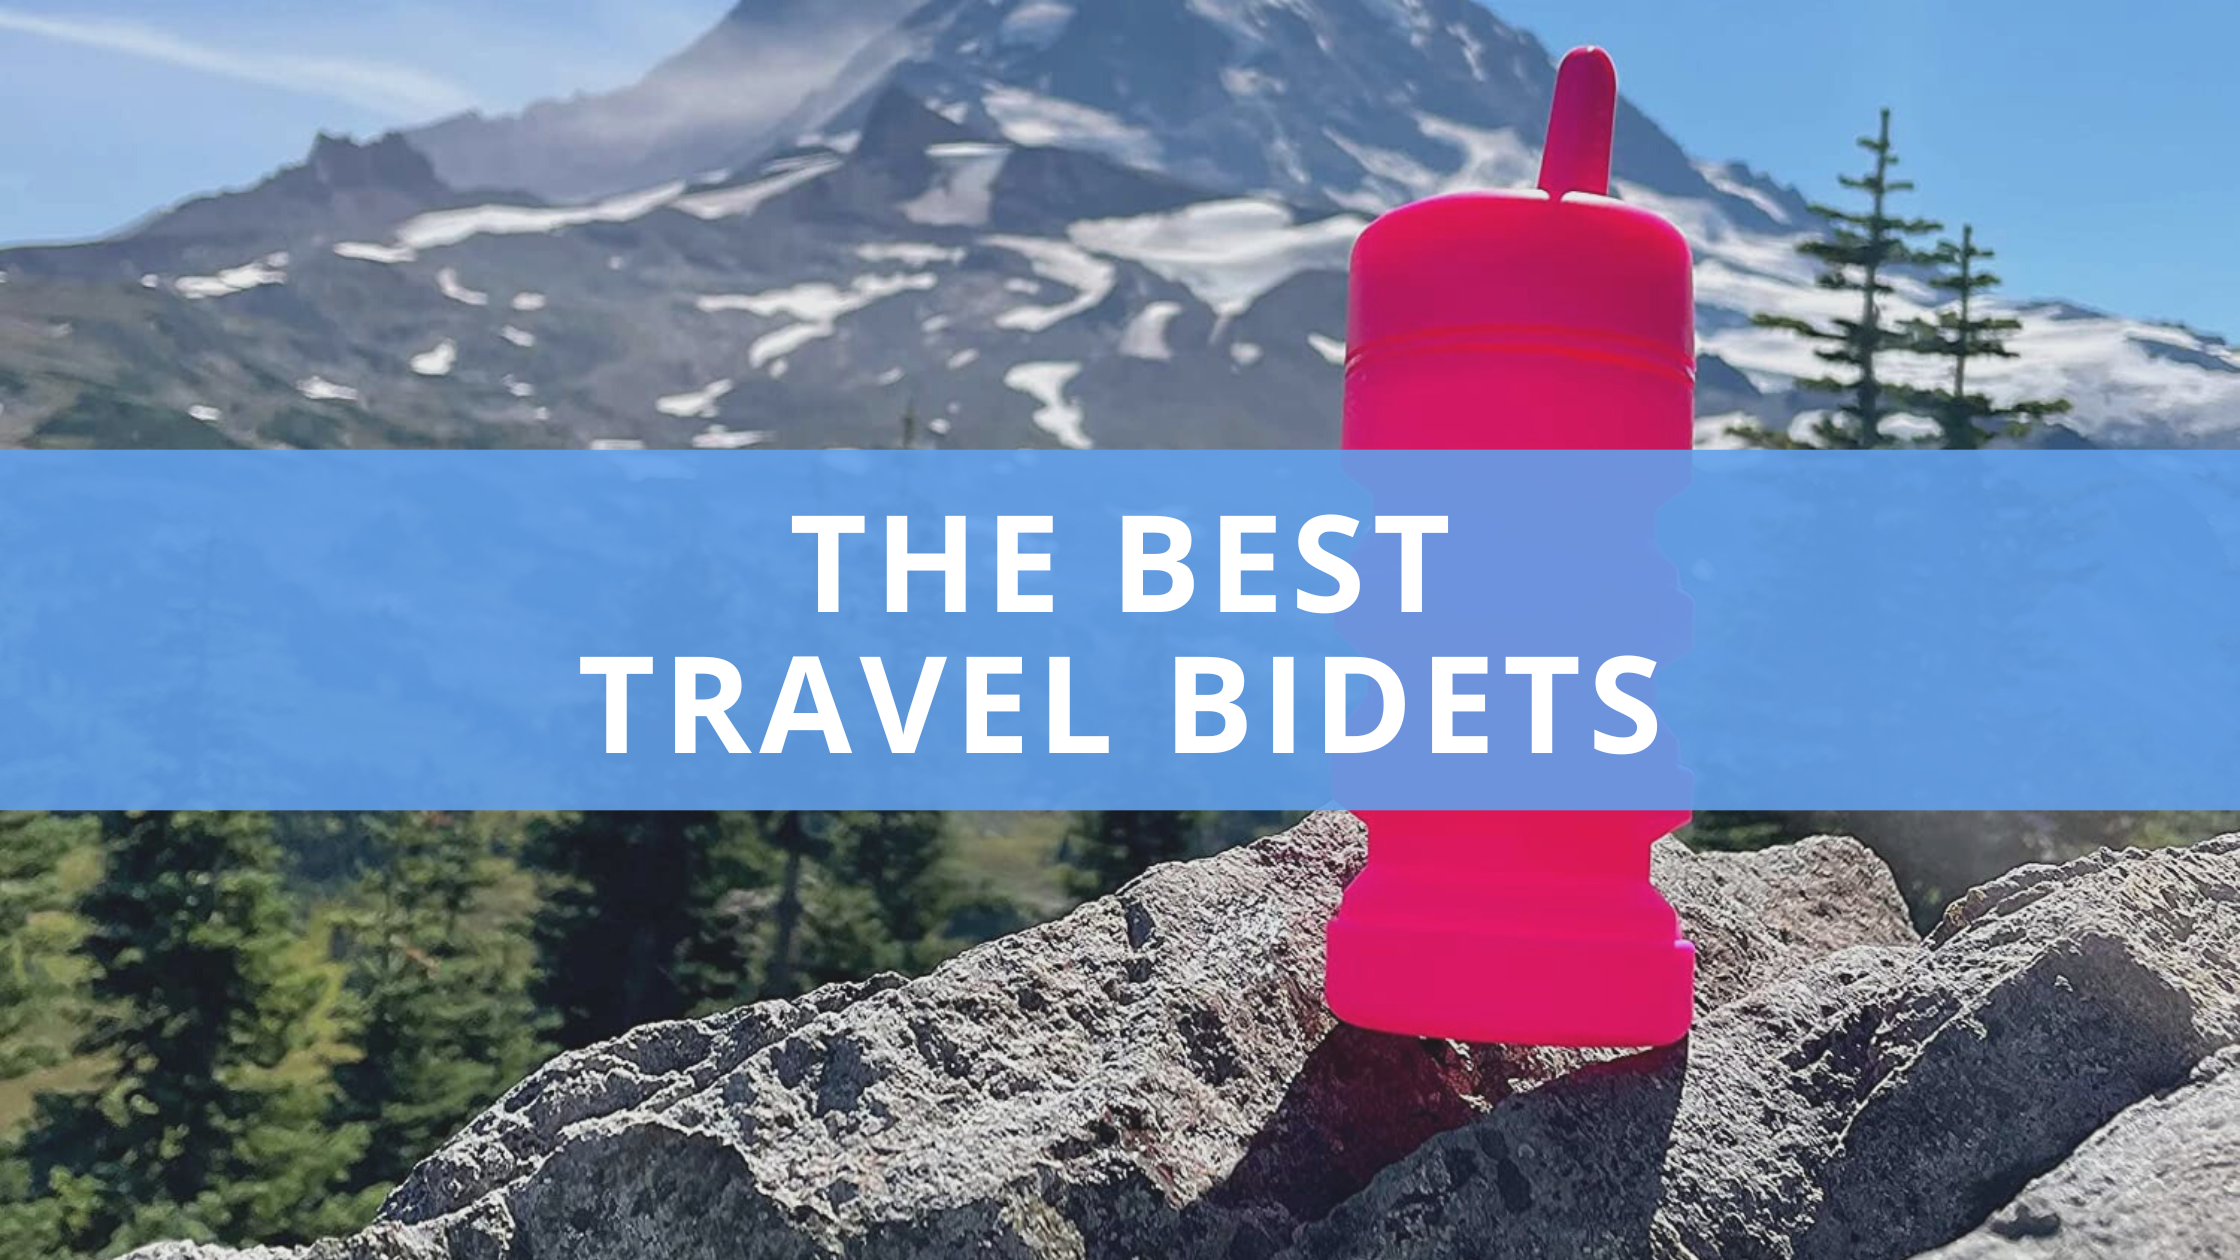 The best travel bidets